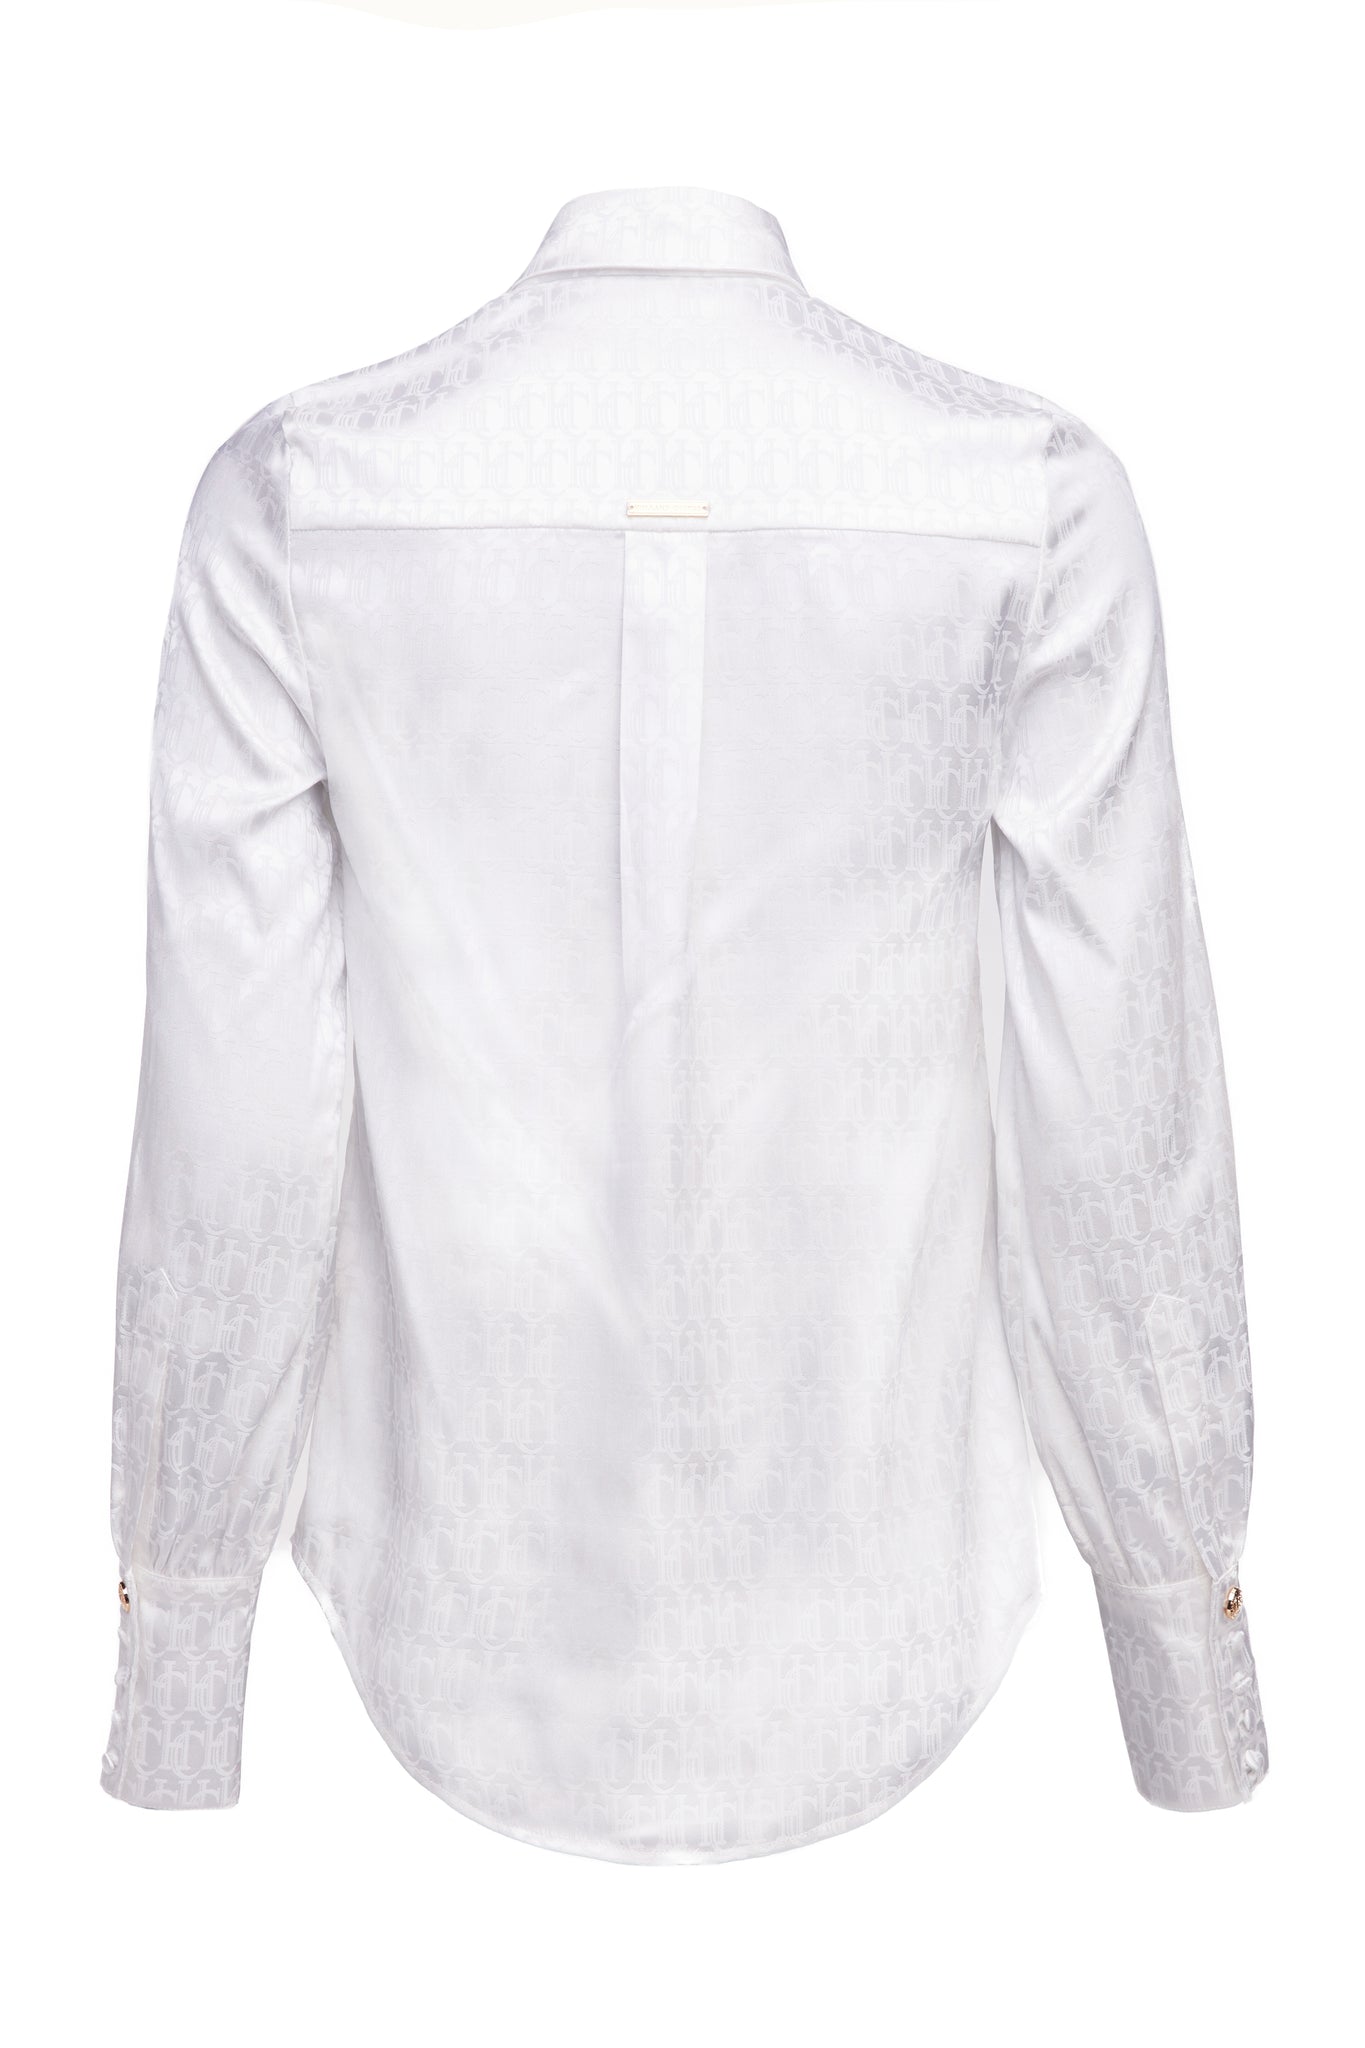 Penny Jacquard Shirt (White)